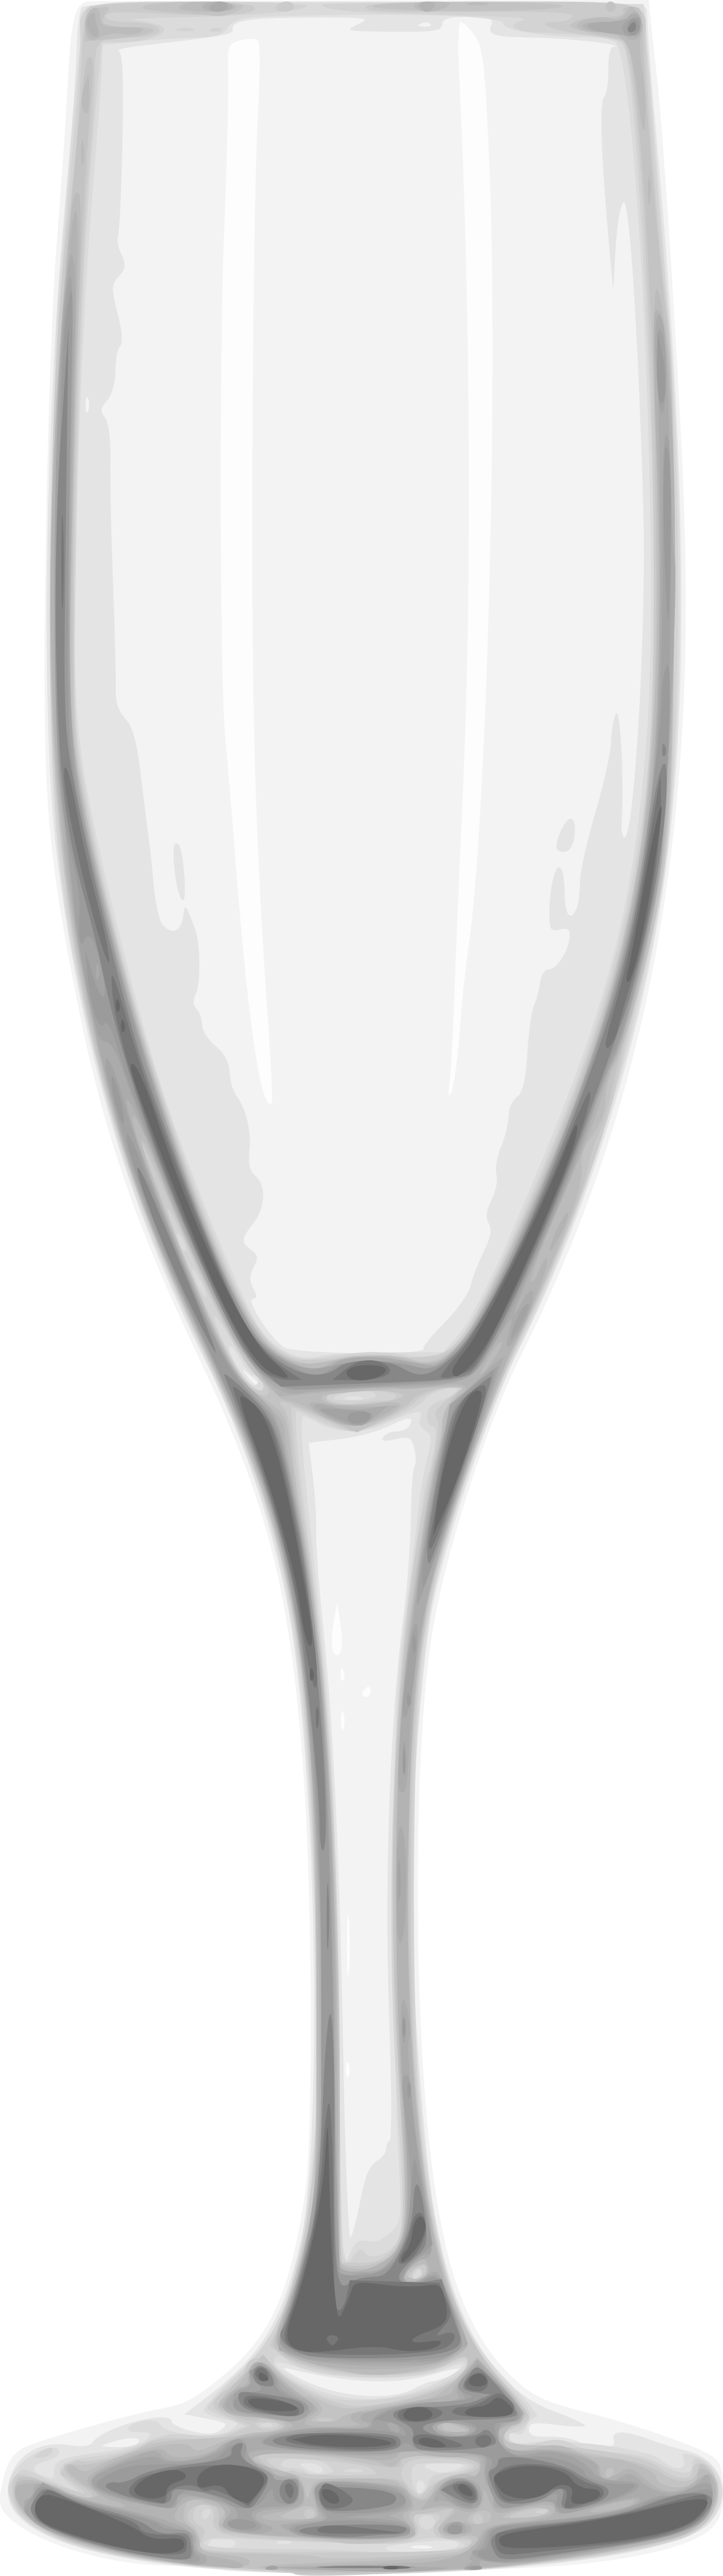 Glass flute - Wikipedia